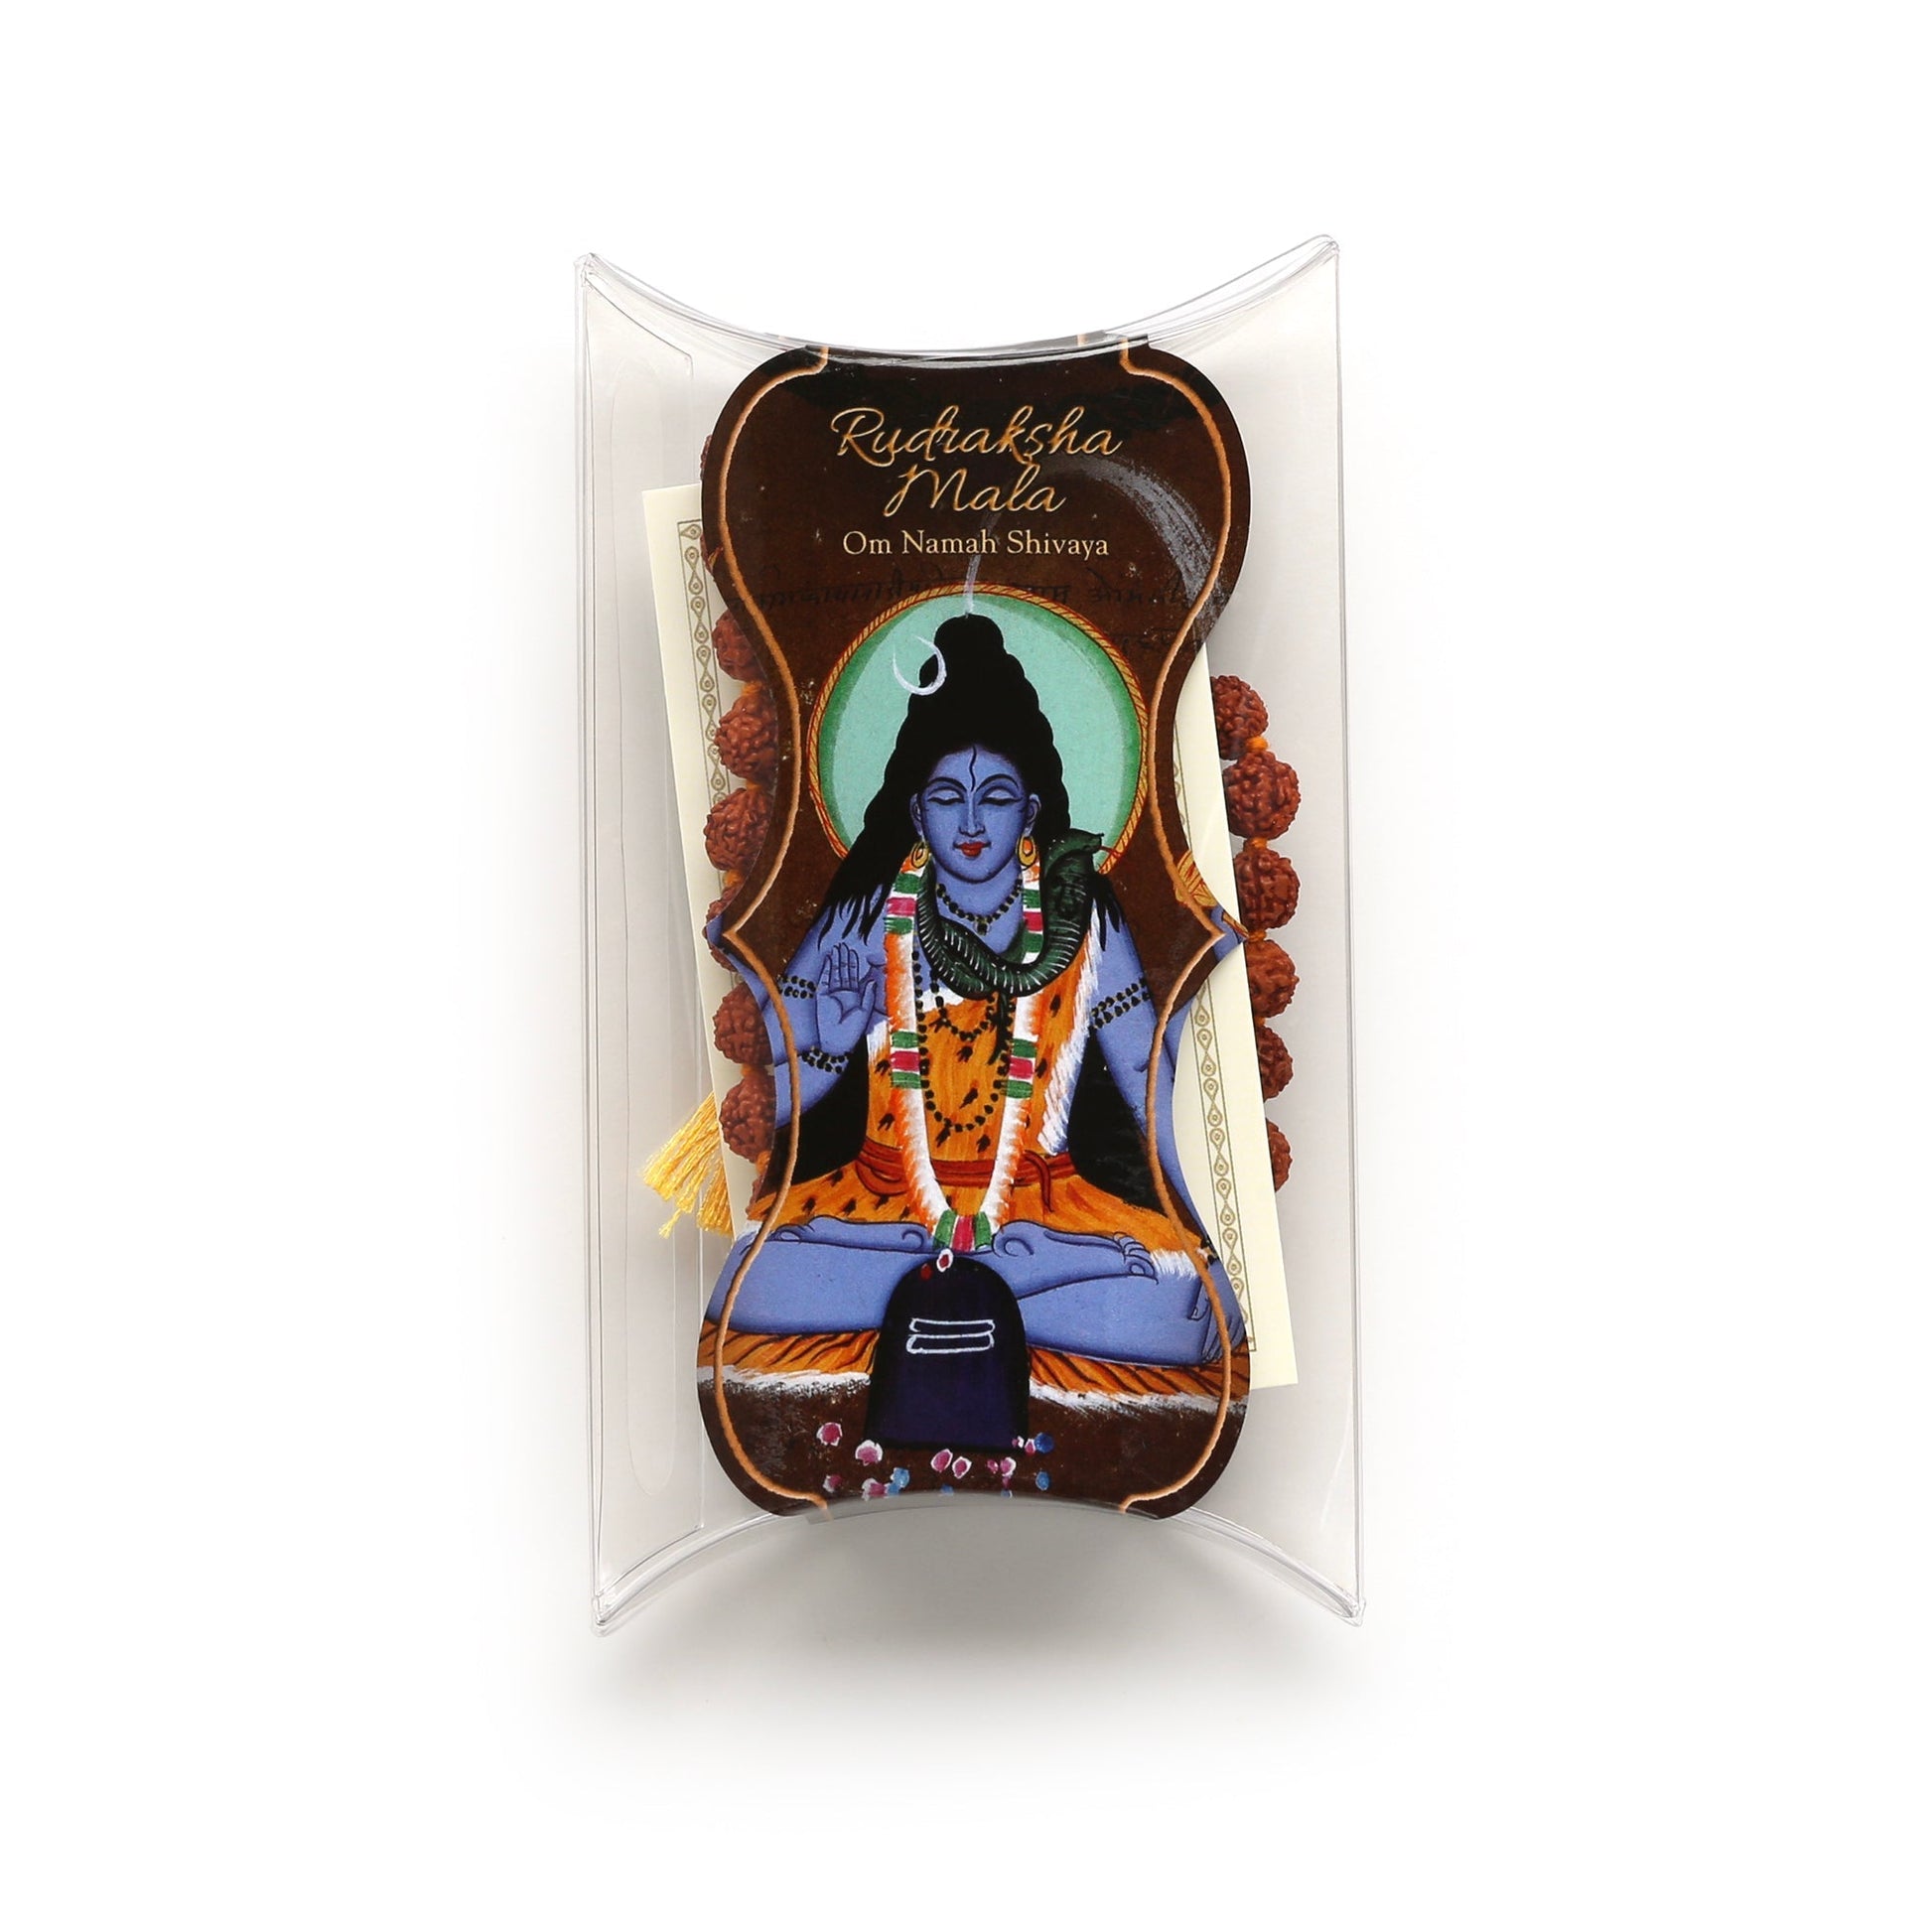 Rudraksha Mala - 108 Prayer Beads - Wholesale and Retail by